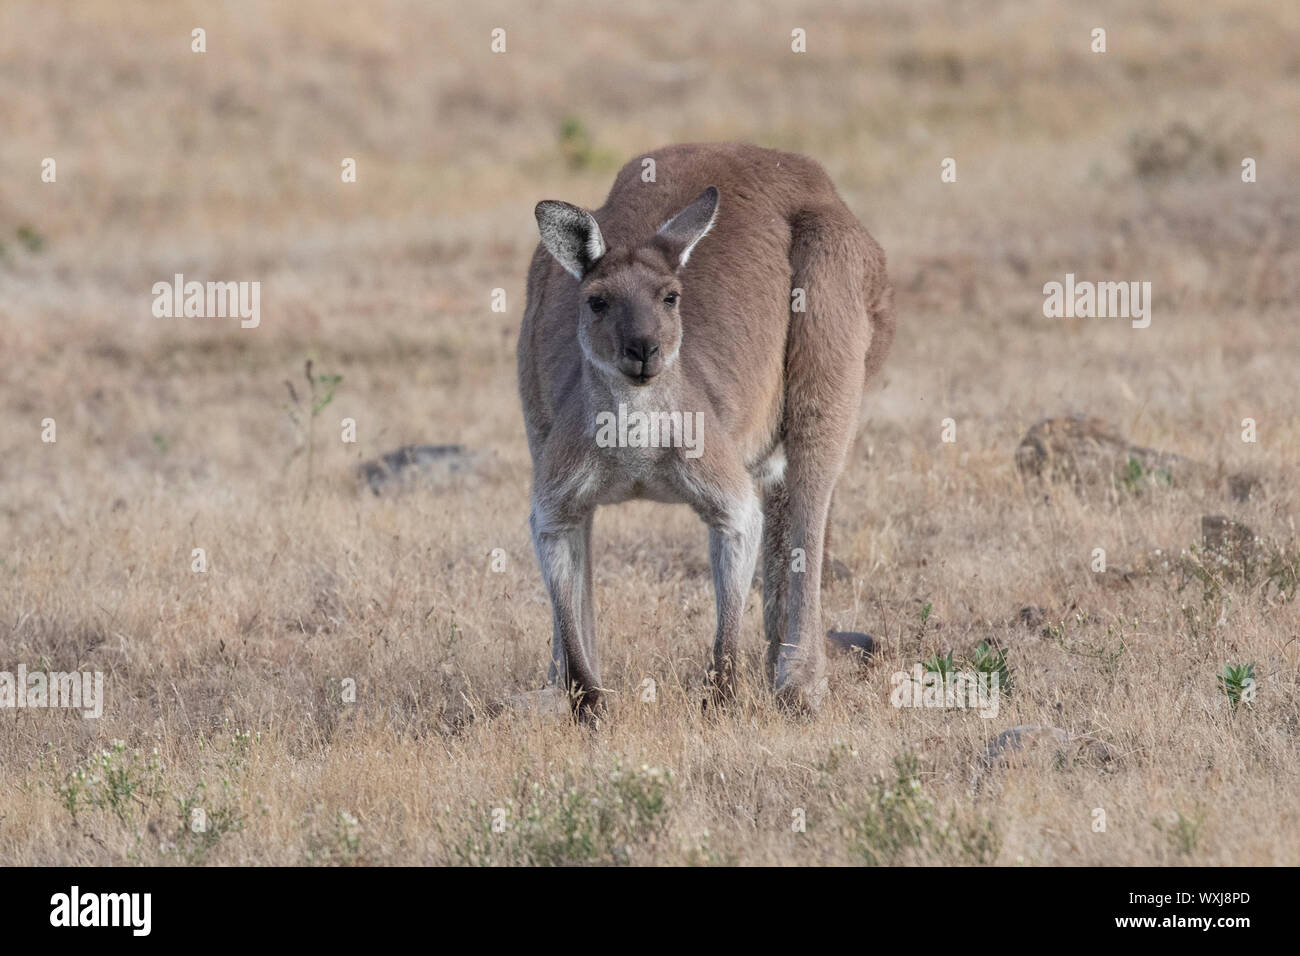 Portrait of a kangaroo in the outback, Australia Stock Photo